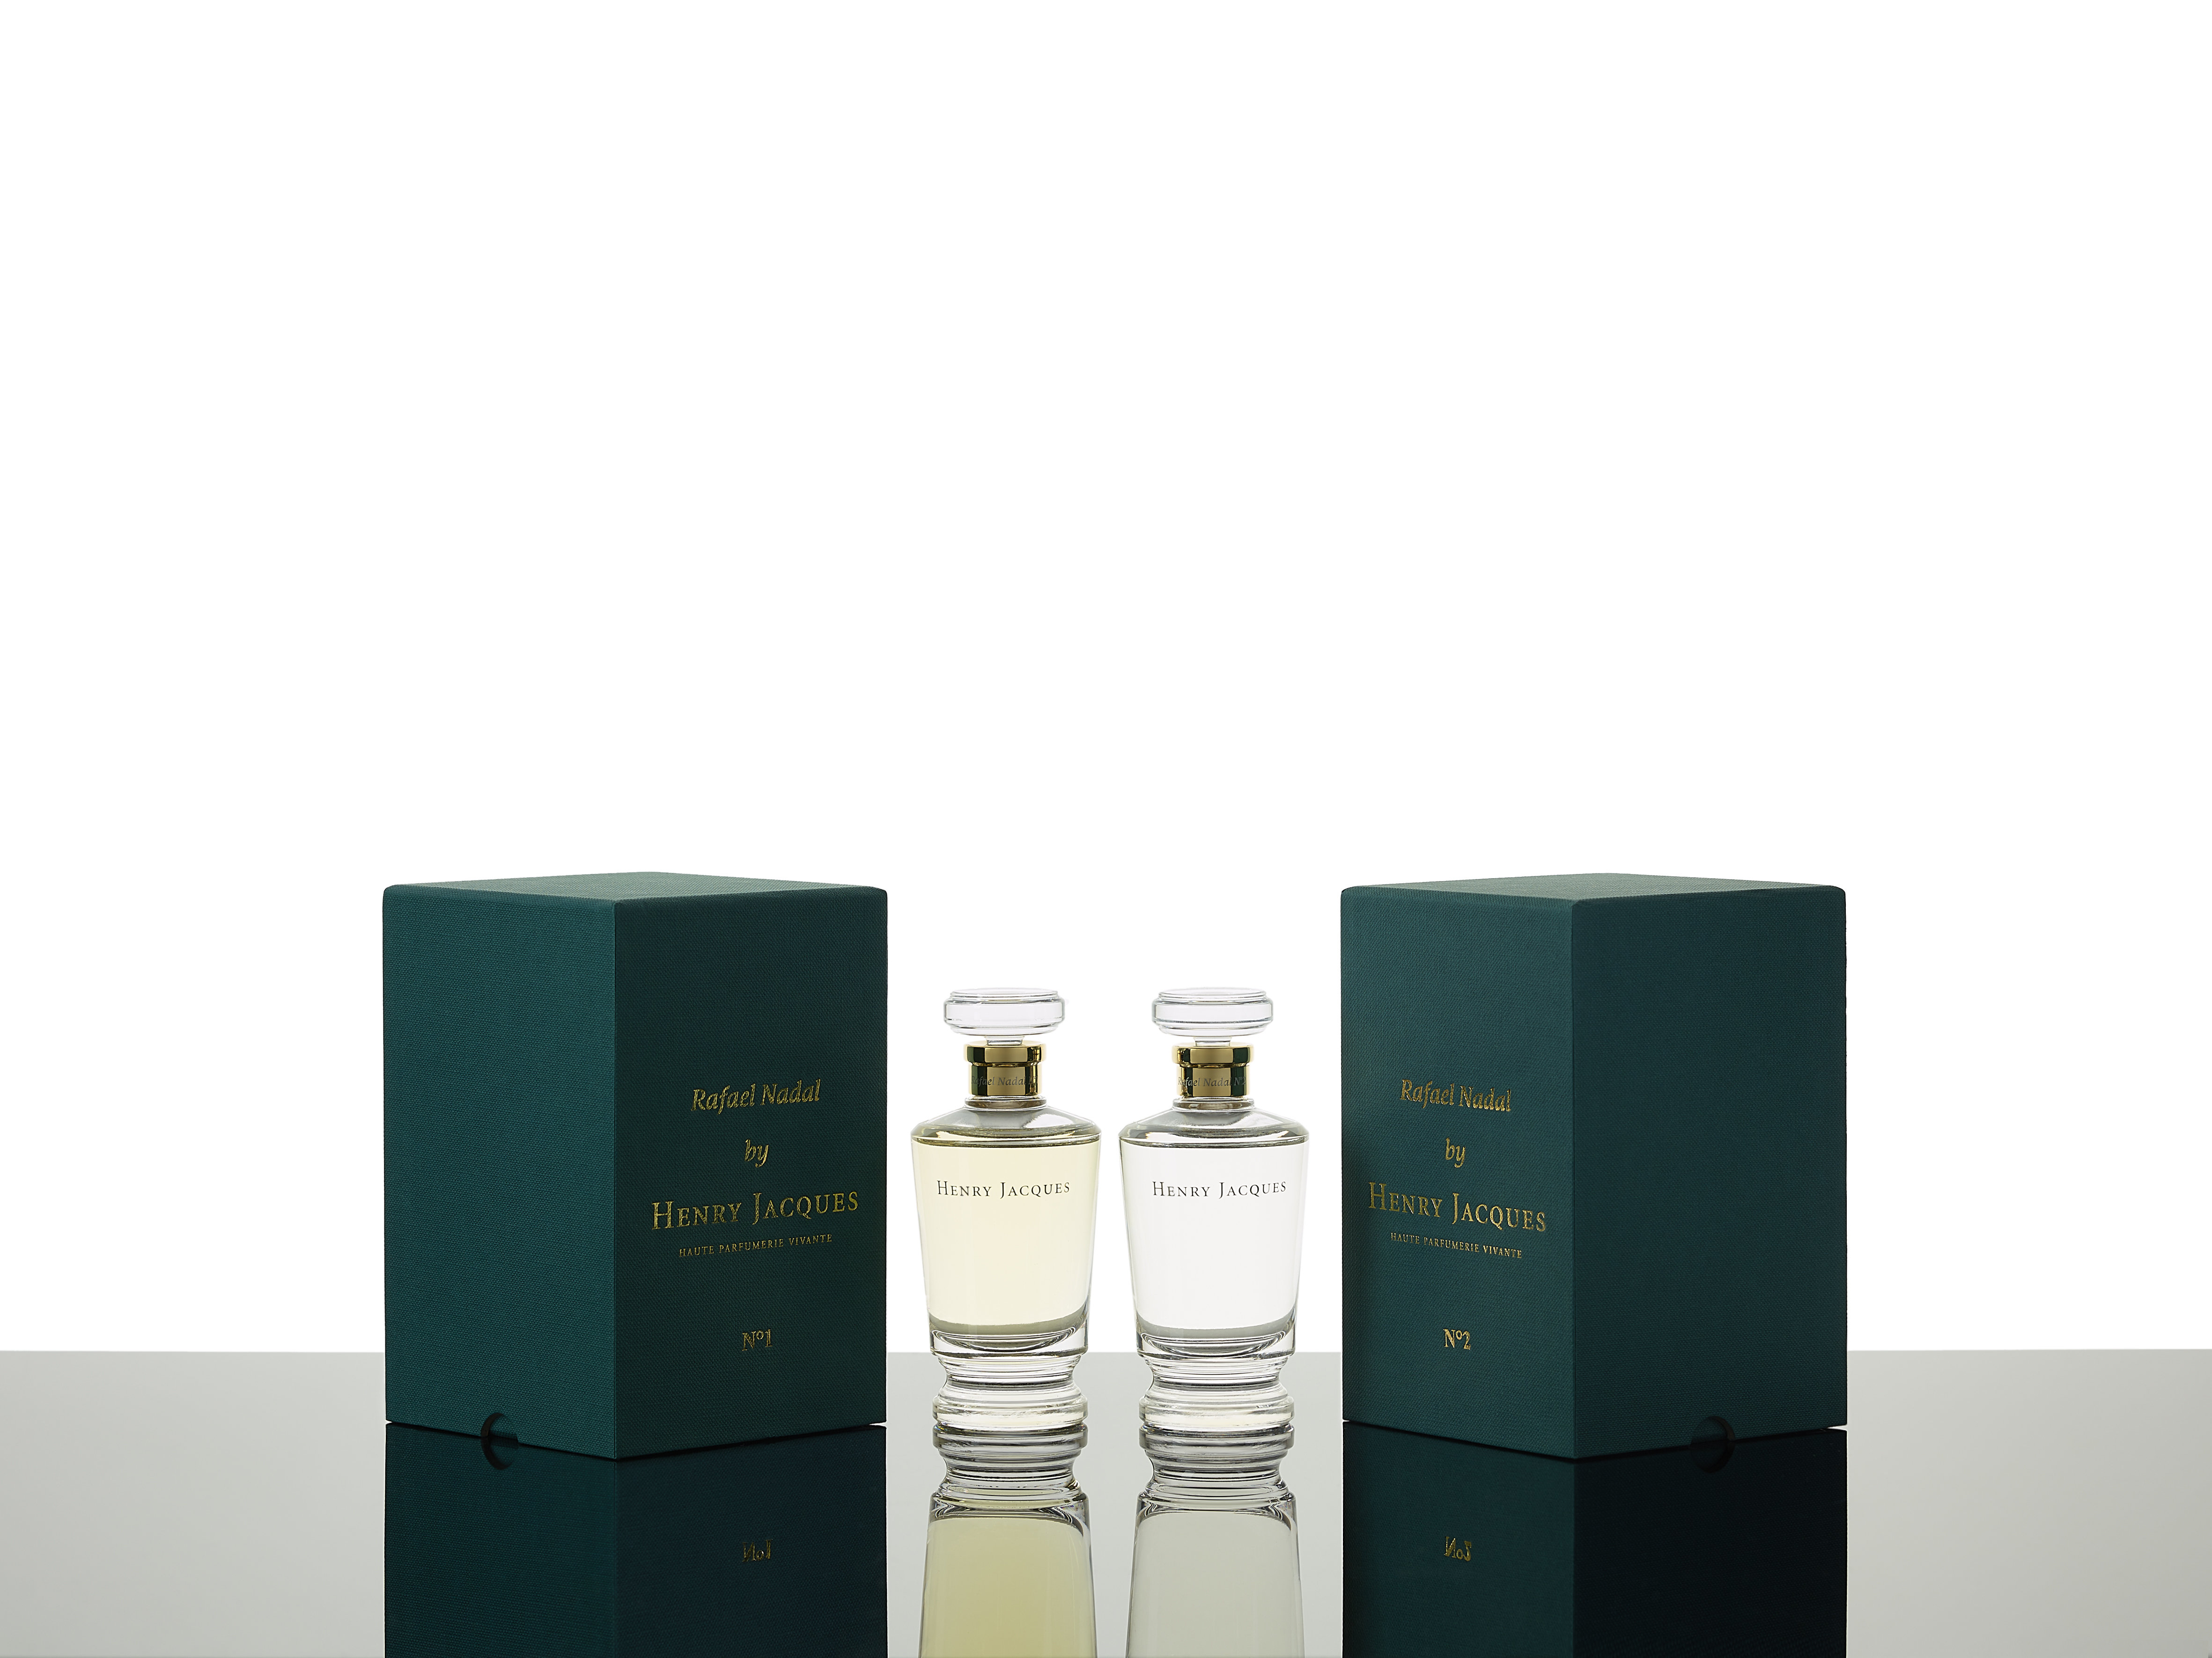 Henry Jacques为纳达尔量身定制了两款香水。